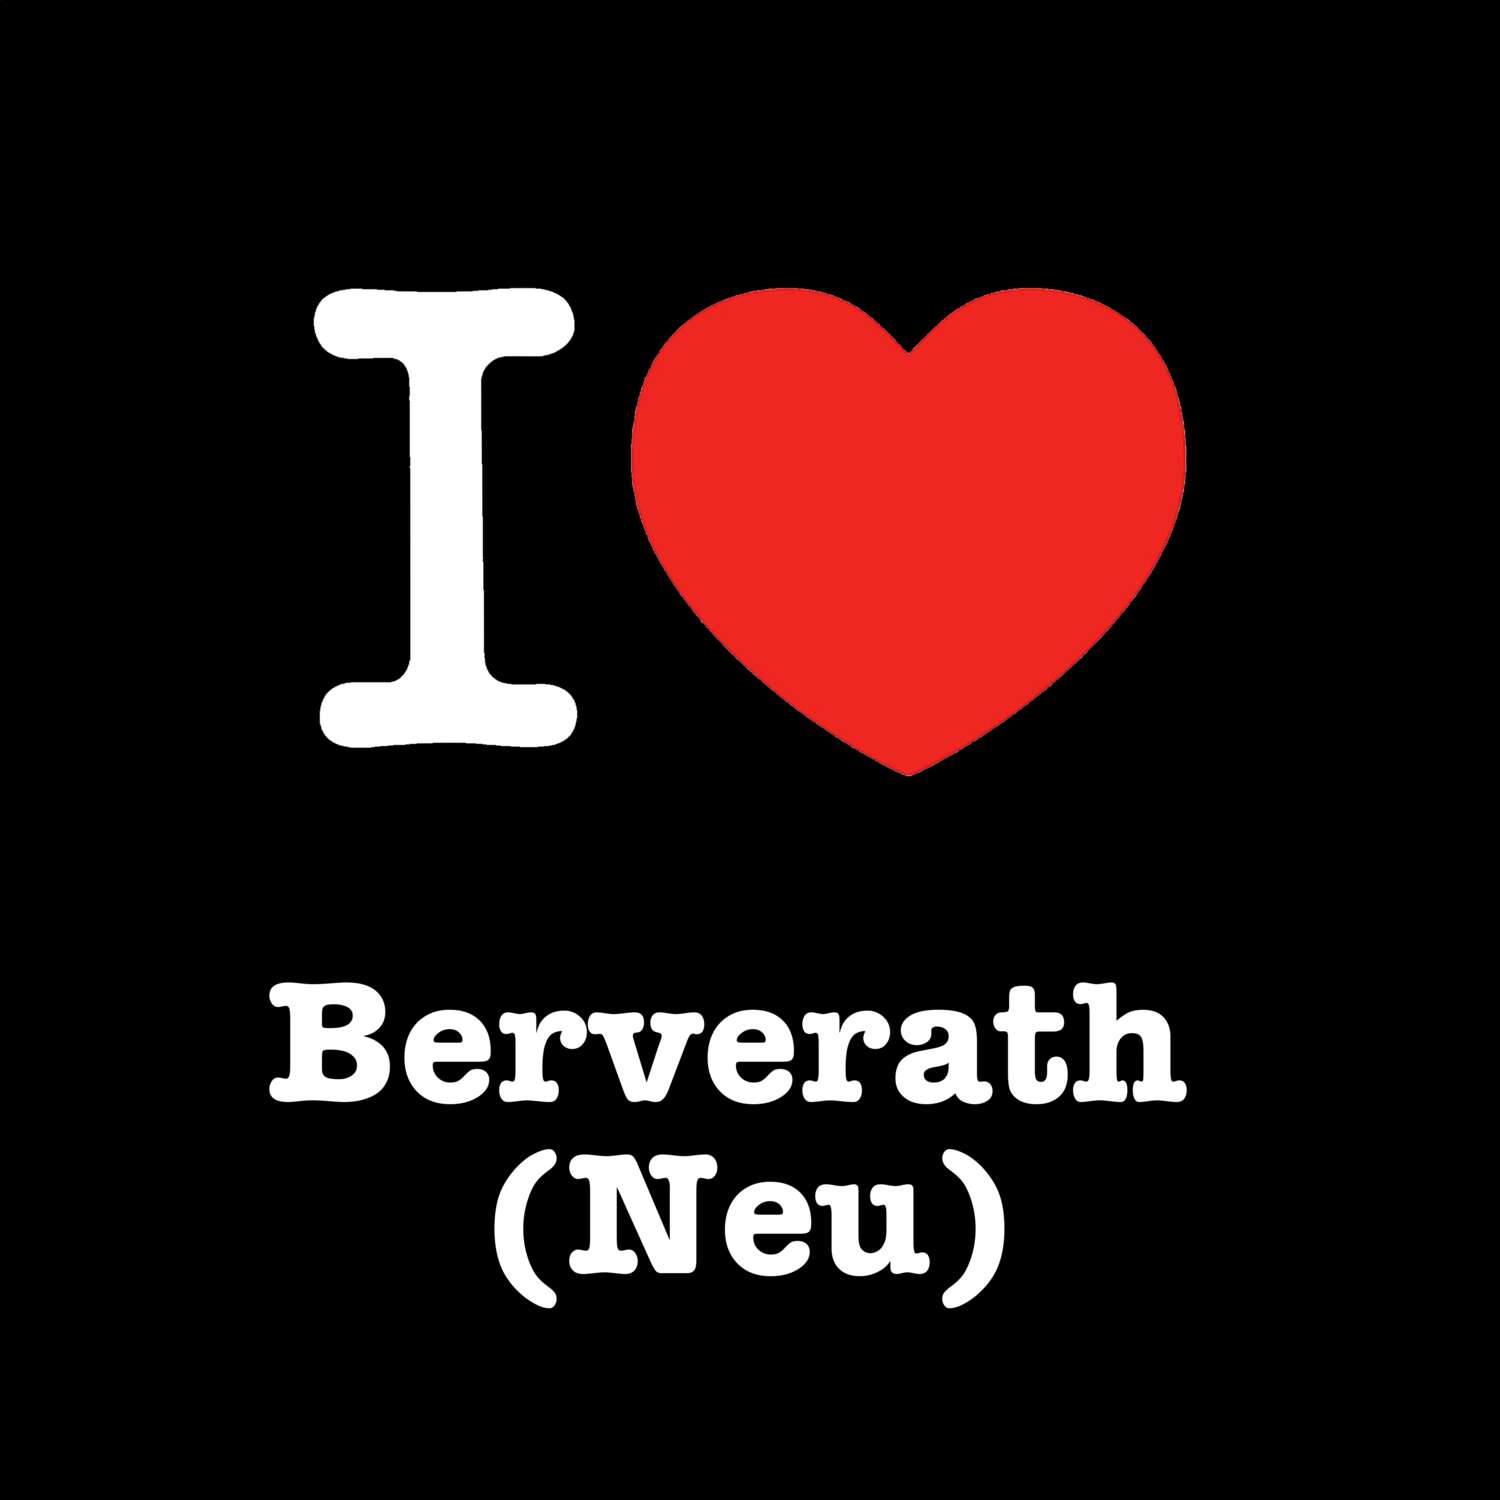 Berverath (Neu) T-Shirt »I love«